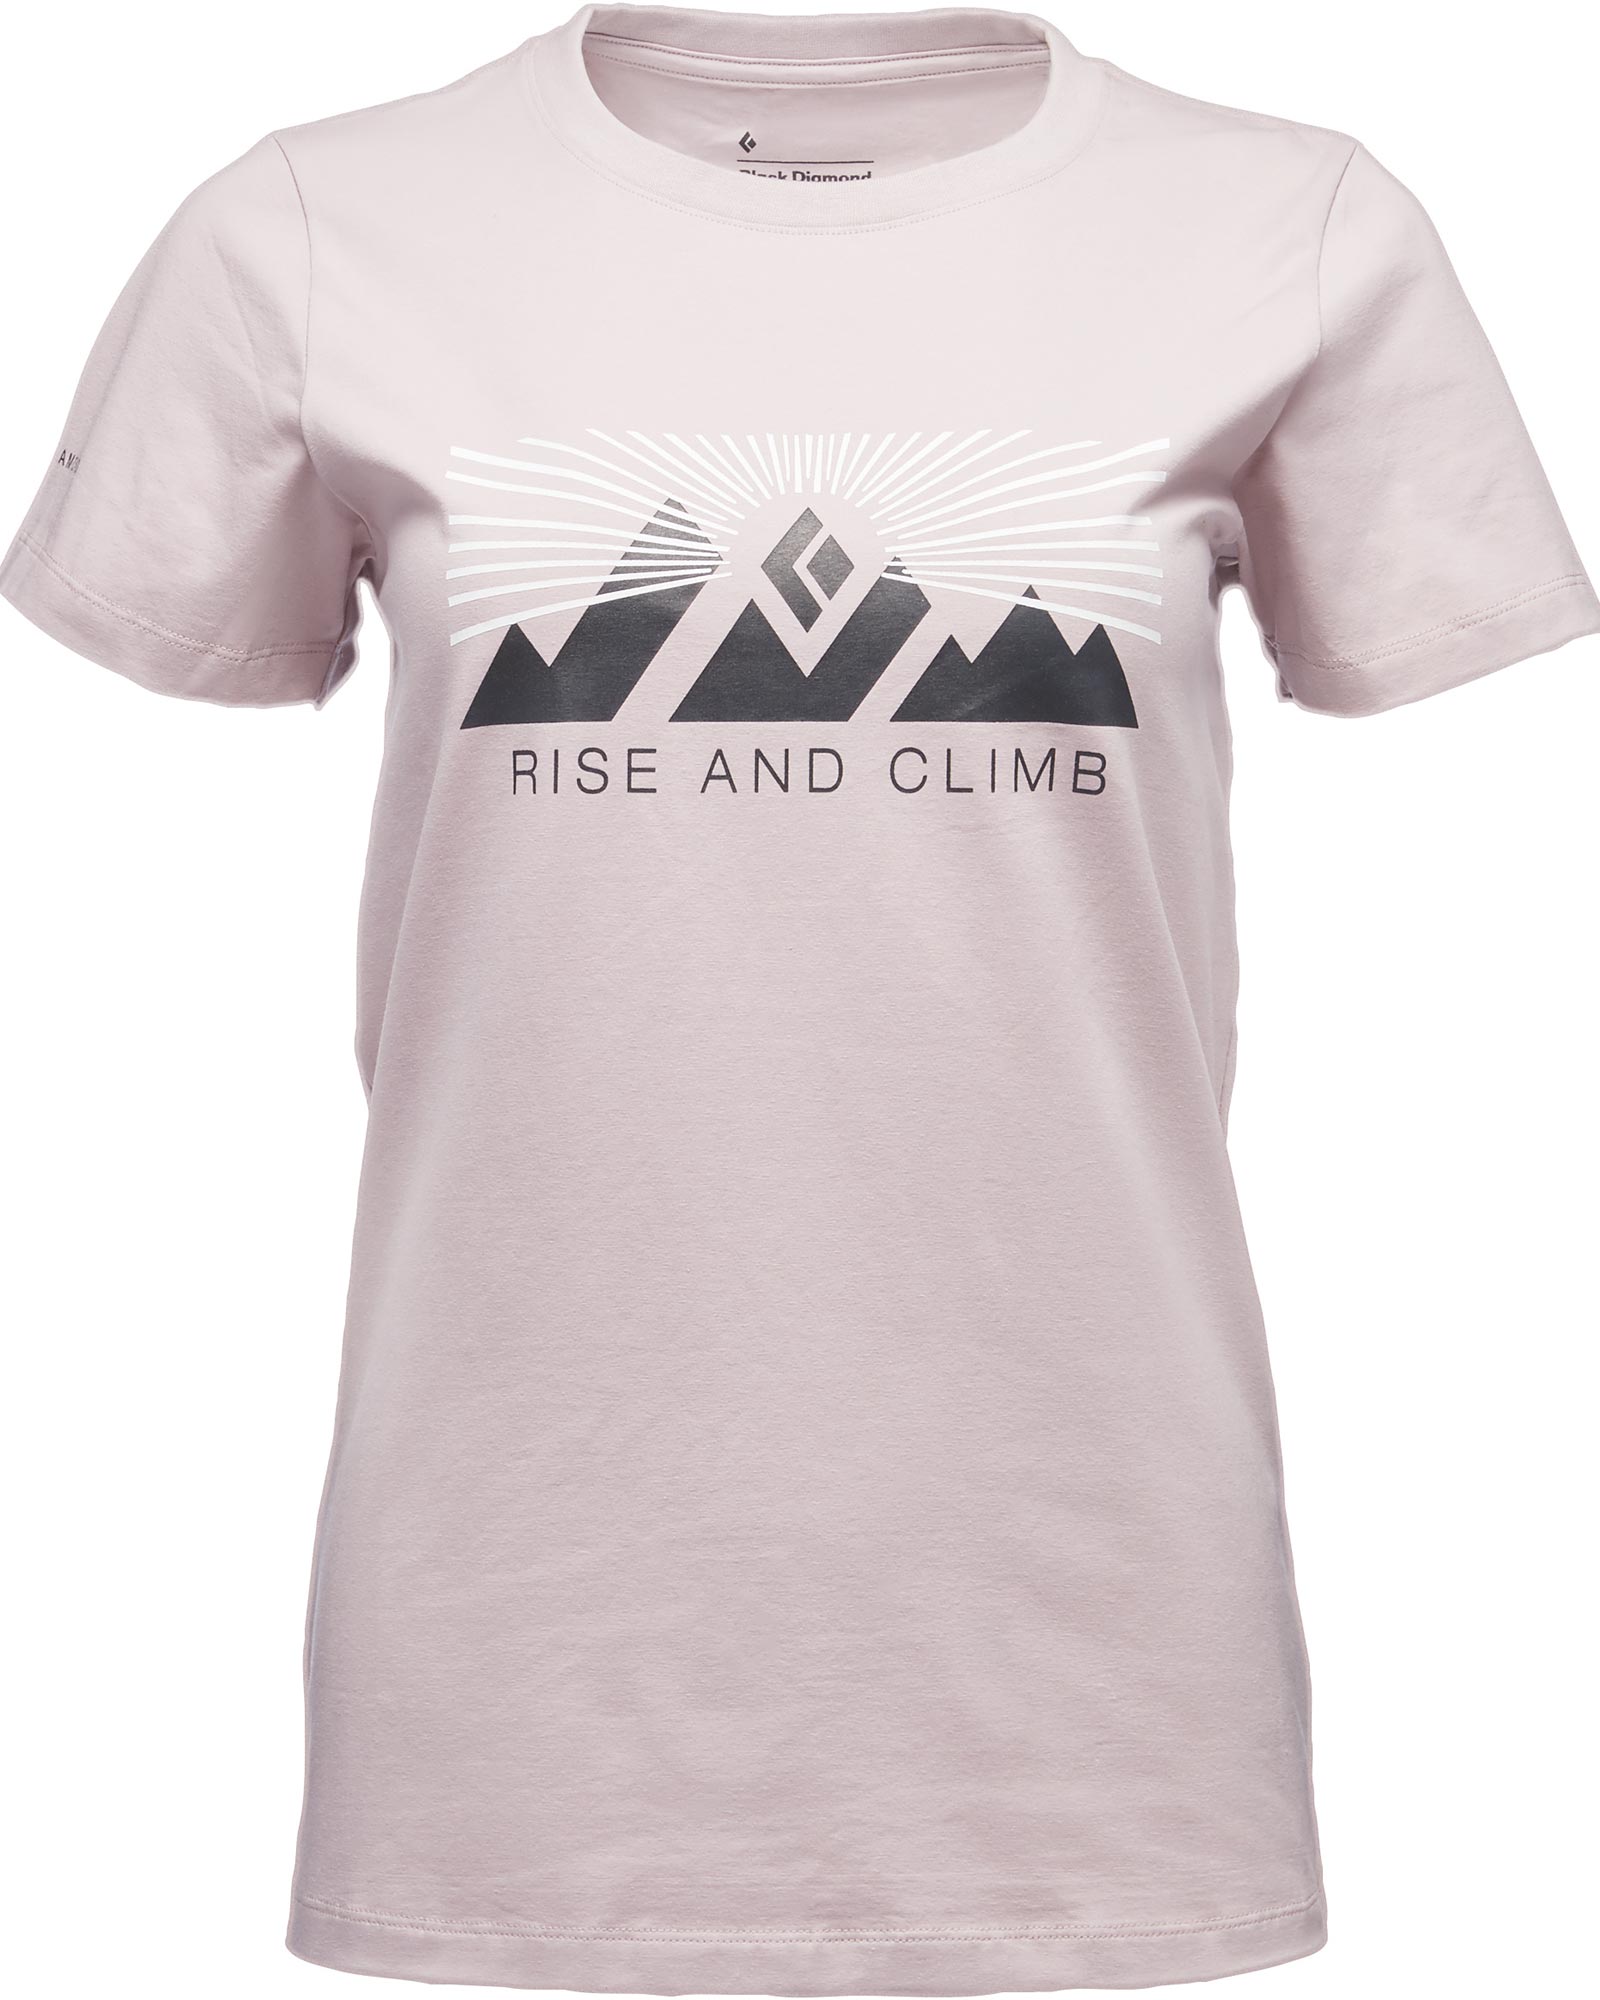 Black Diamond Rise and Climb Women’s T Shirt - Wisteria L